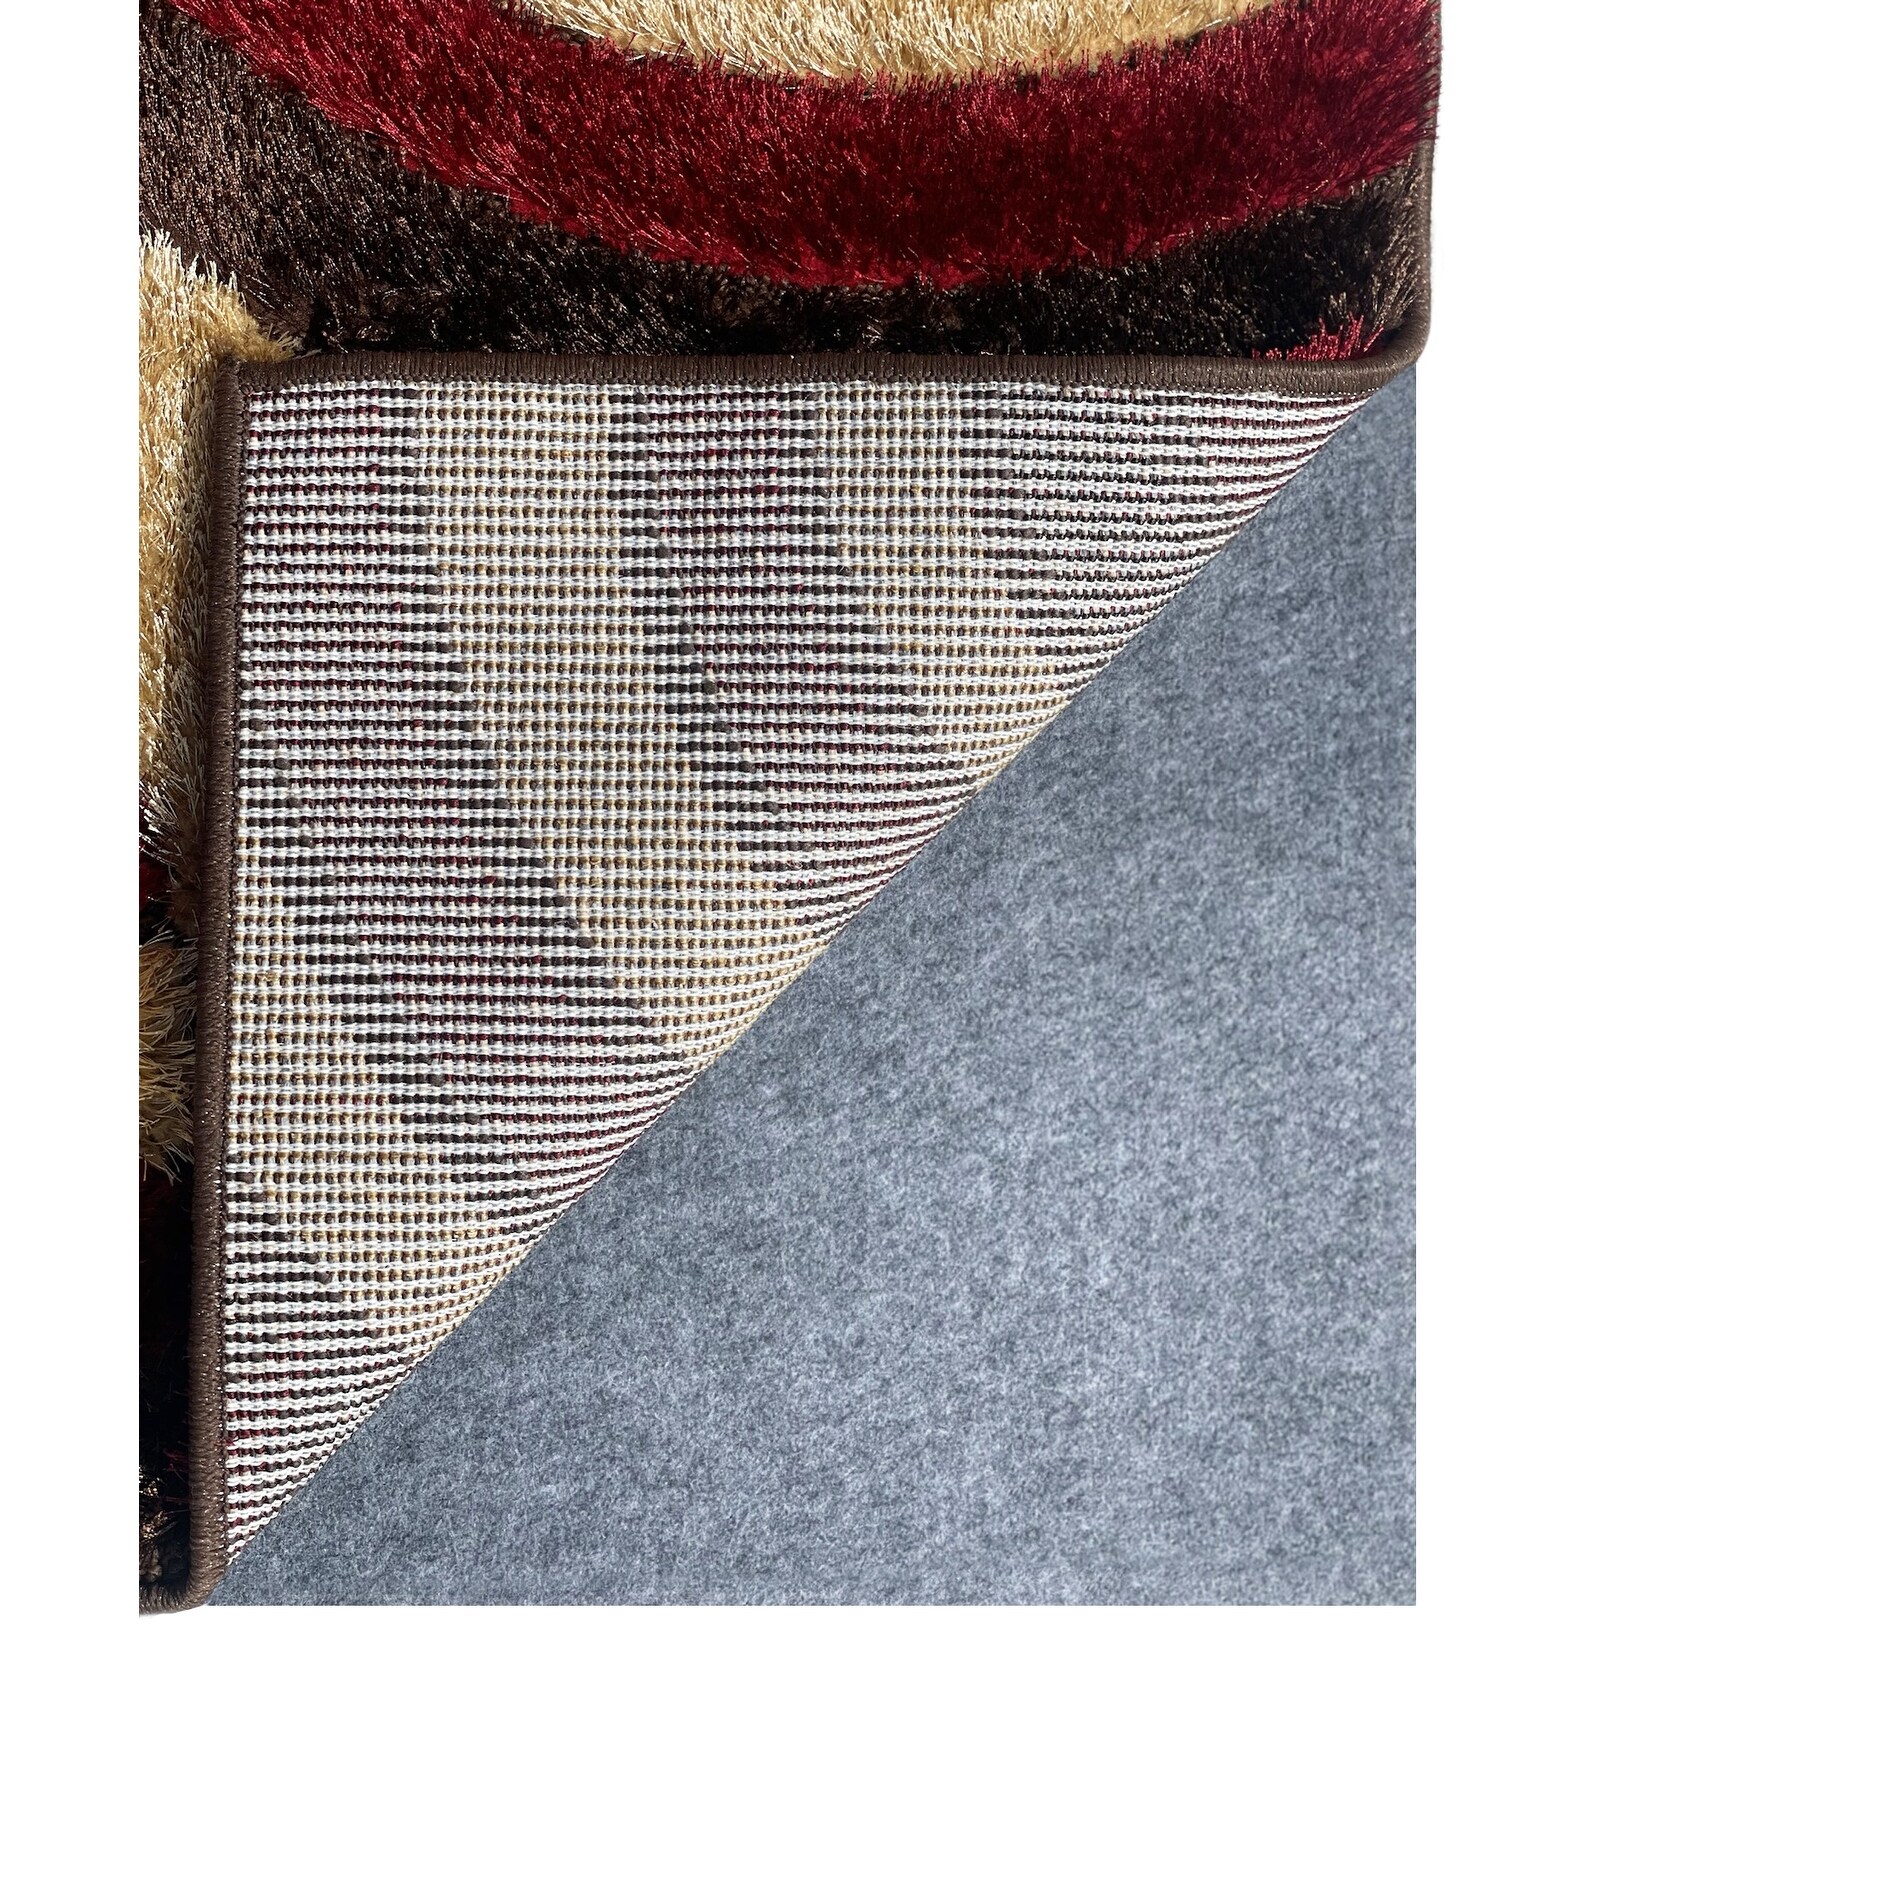 1/3 Thick Premium Non-slip Reduce Noise Carpet Mat Rug Pad for